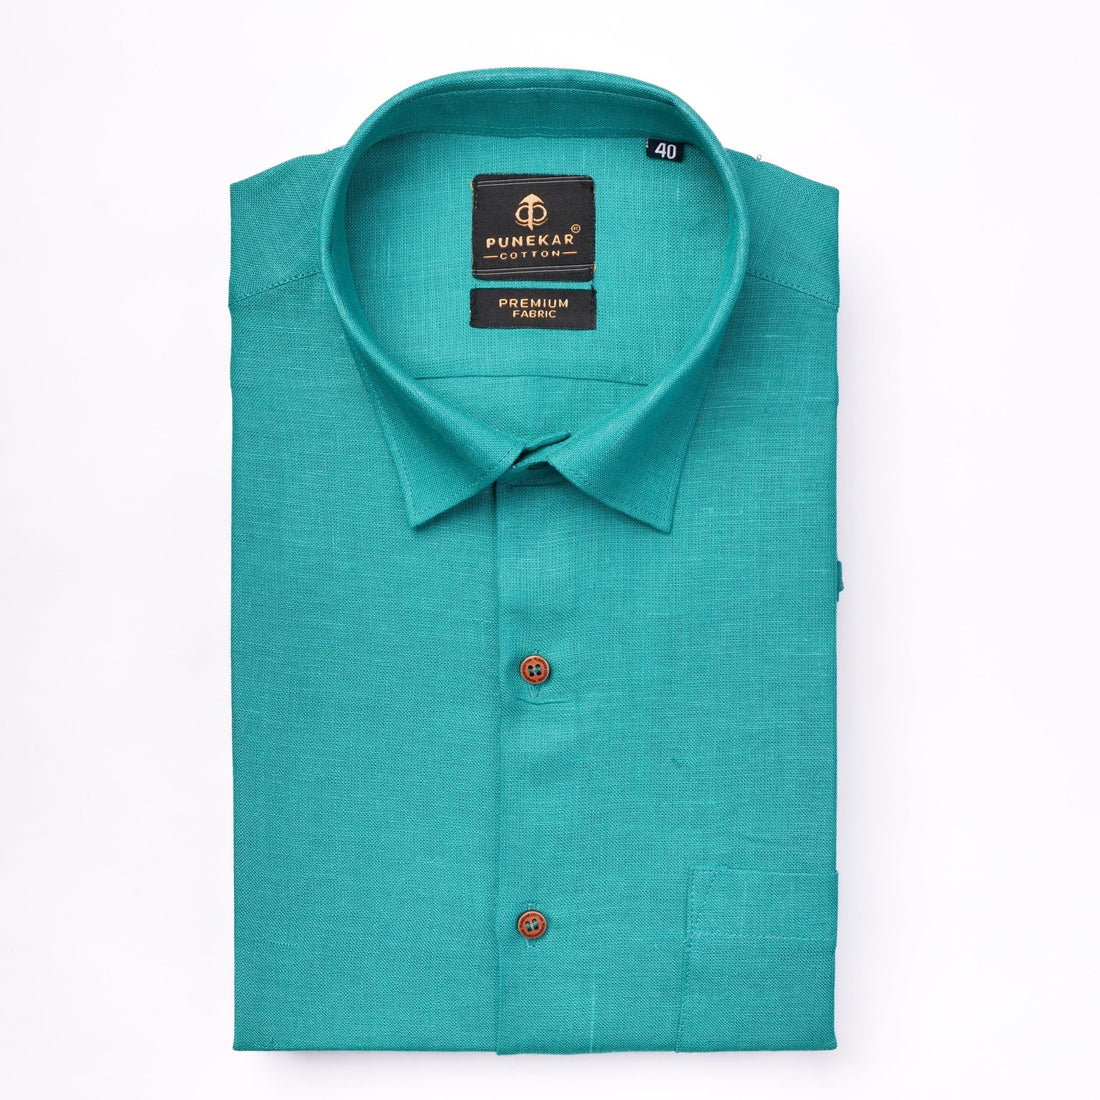 Peacock Green Color Prime Linen Shirt For Men - Punekar Cotton